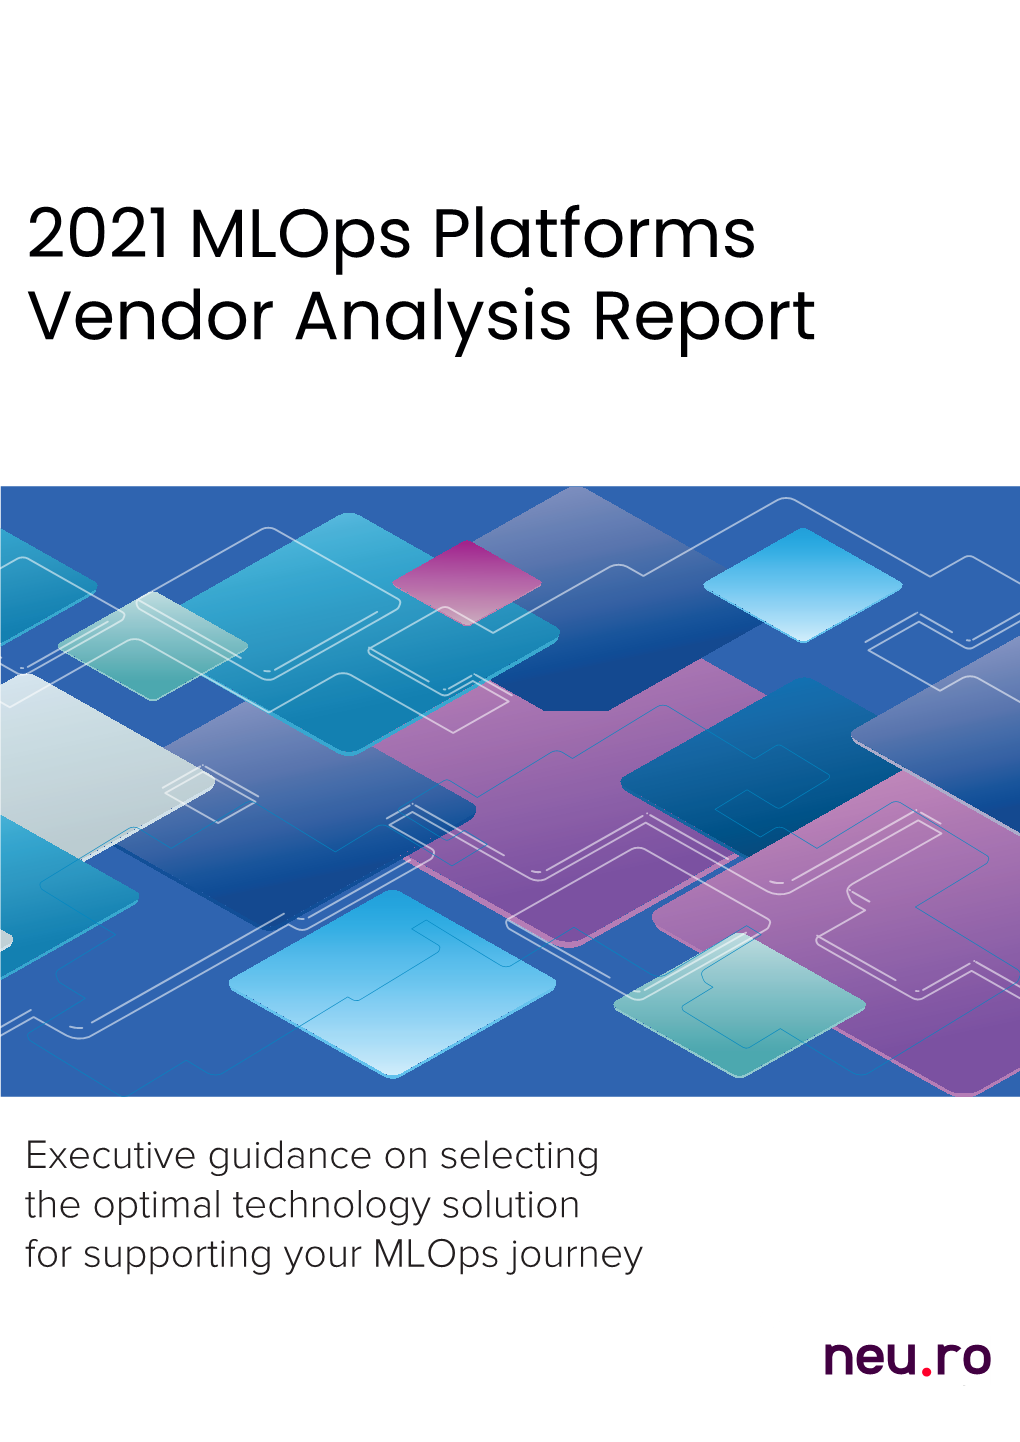 2021 Mlops Platforms Vendor Analysis Report